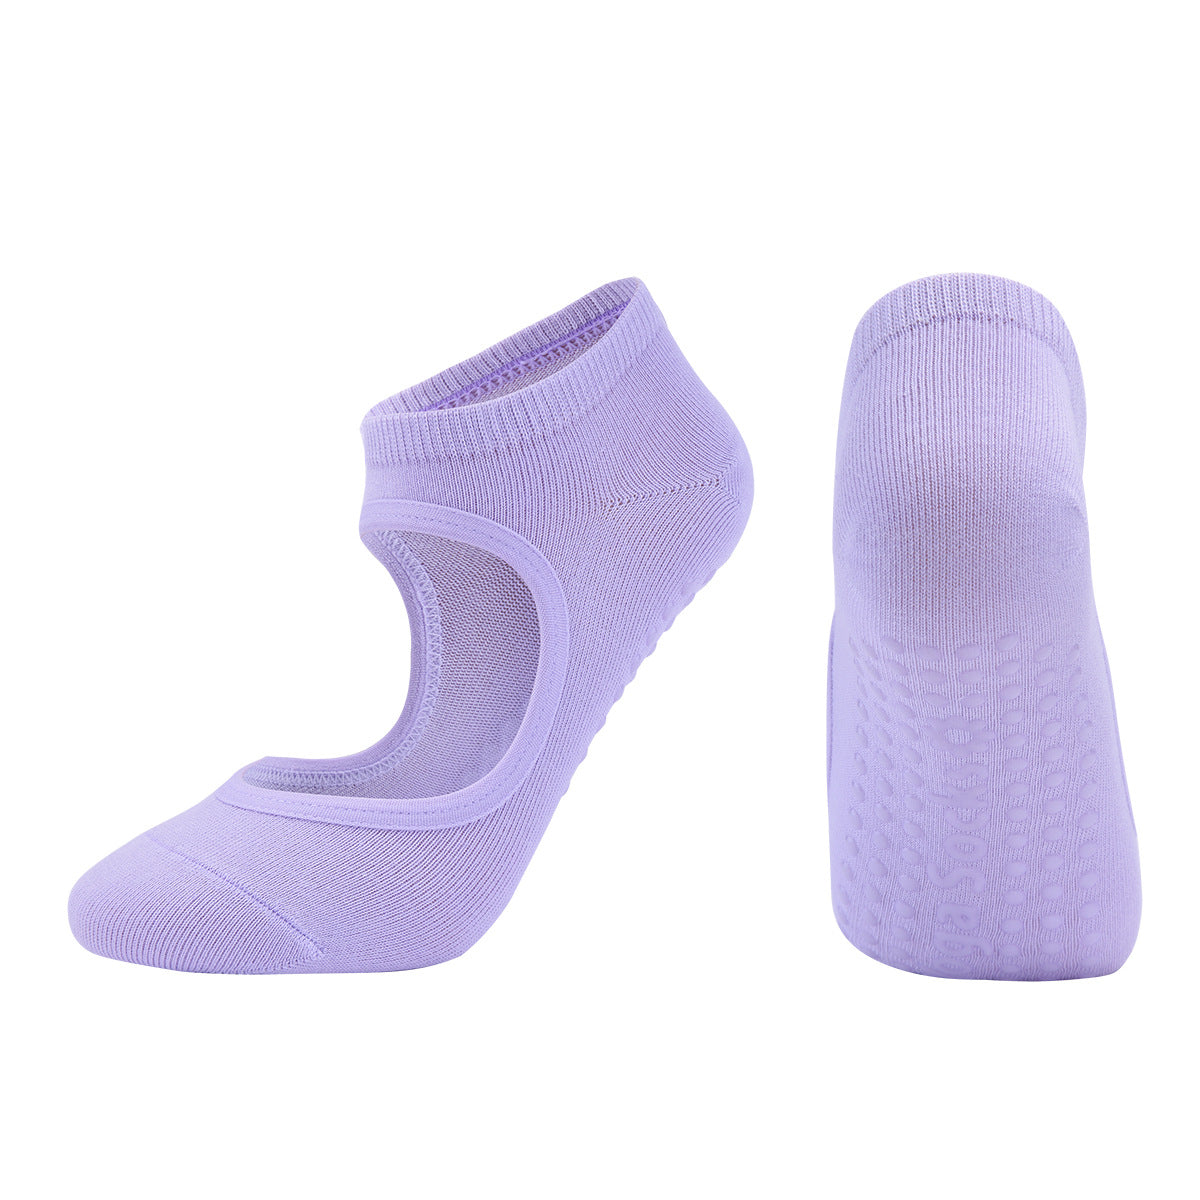 Combed cotton yoga socks